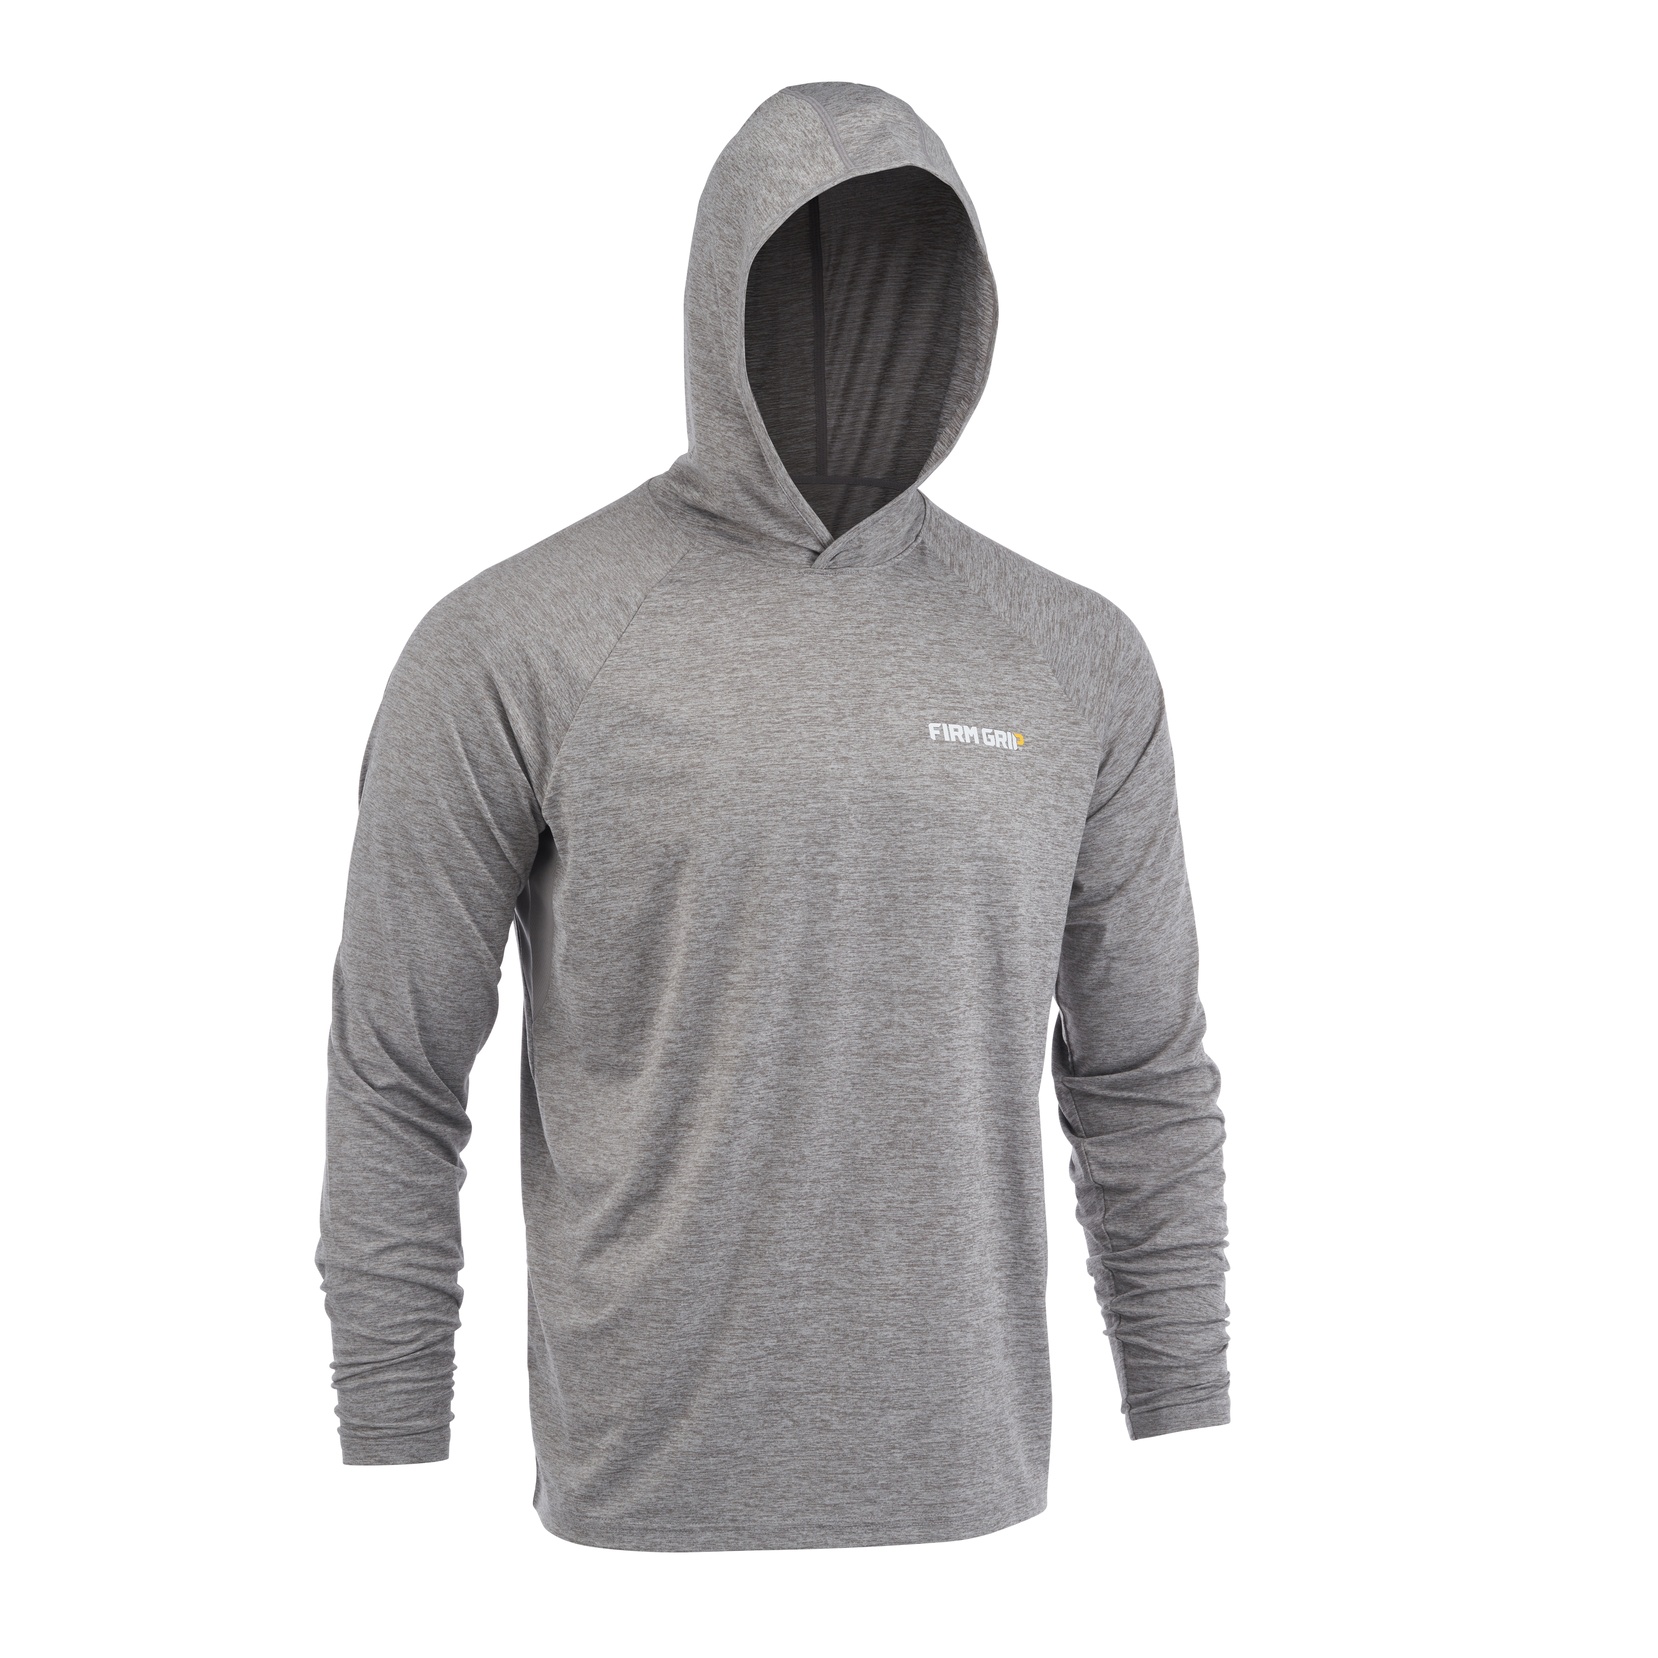 Men's Gray Performance Long Sleeved Hoodie Shirt - Firm Grip